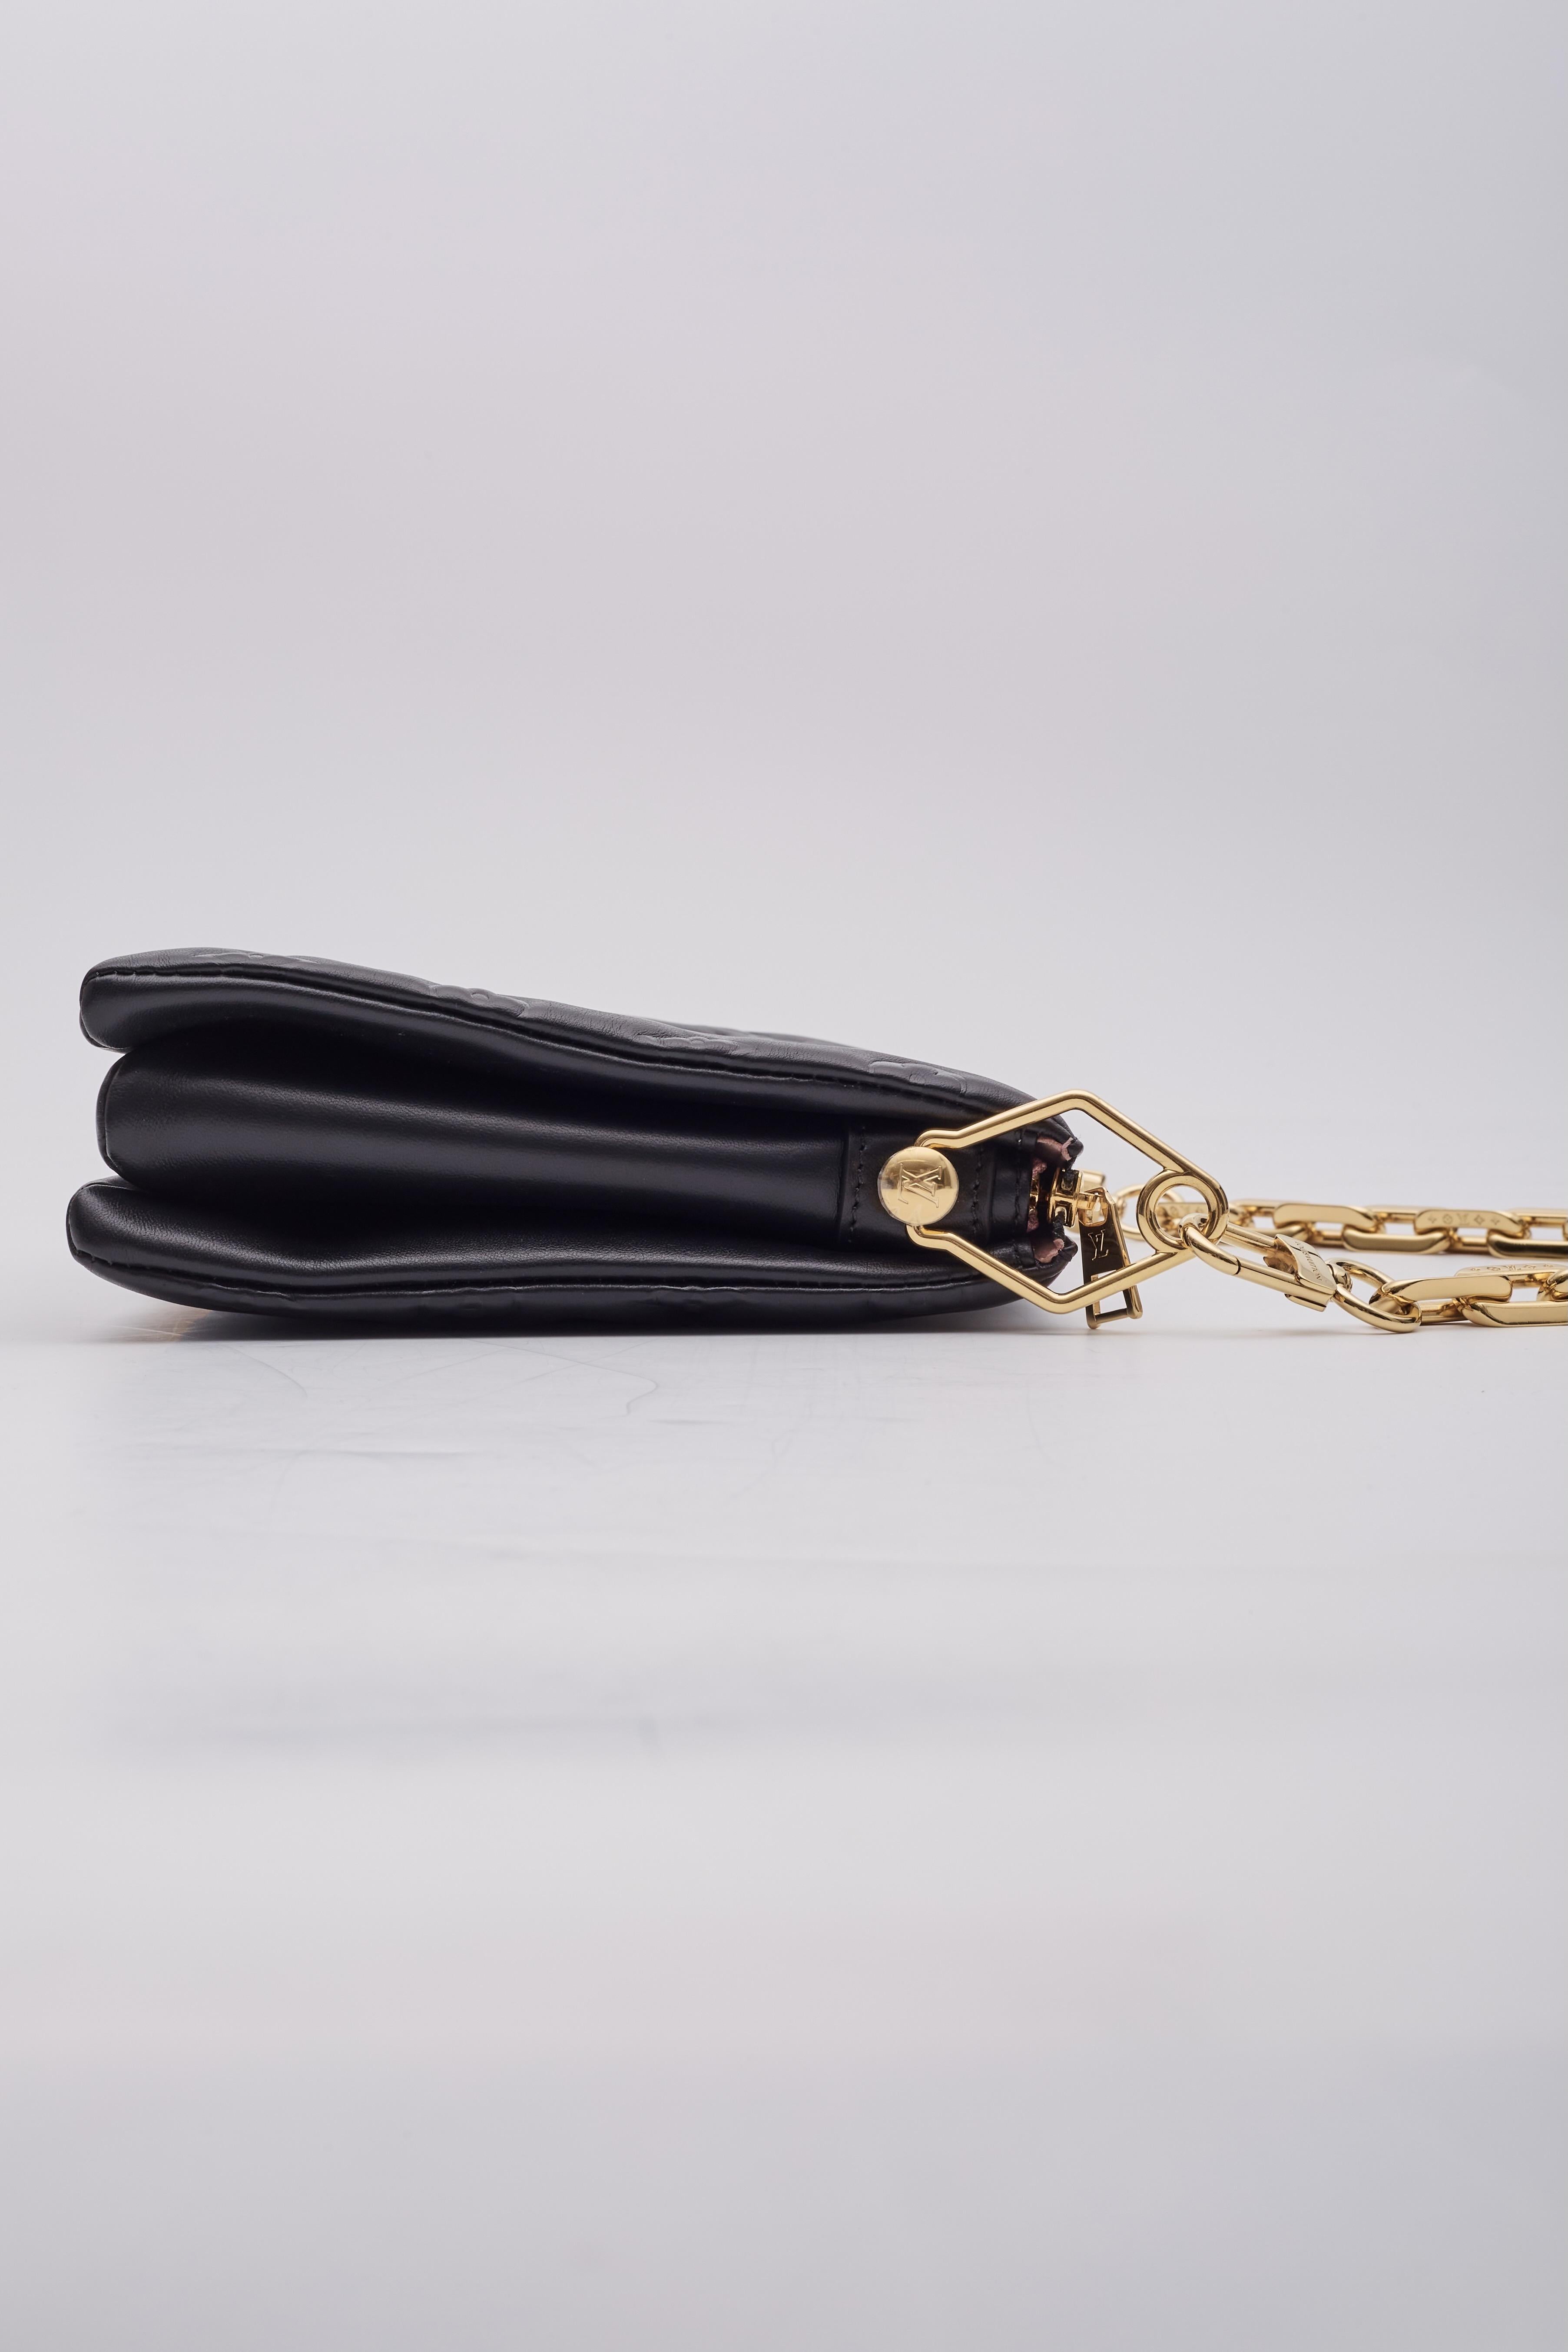 Louis Vuitton Black Lambskin Embossed Monogram Coussin Pm Bag For Sale 2